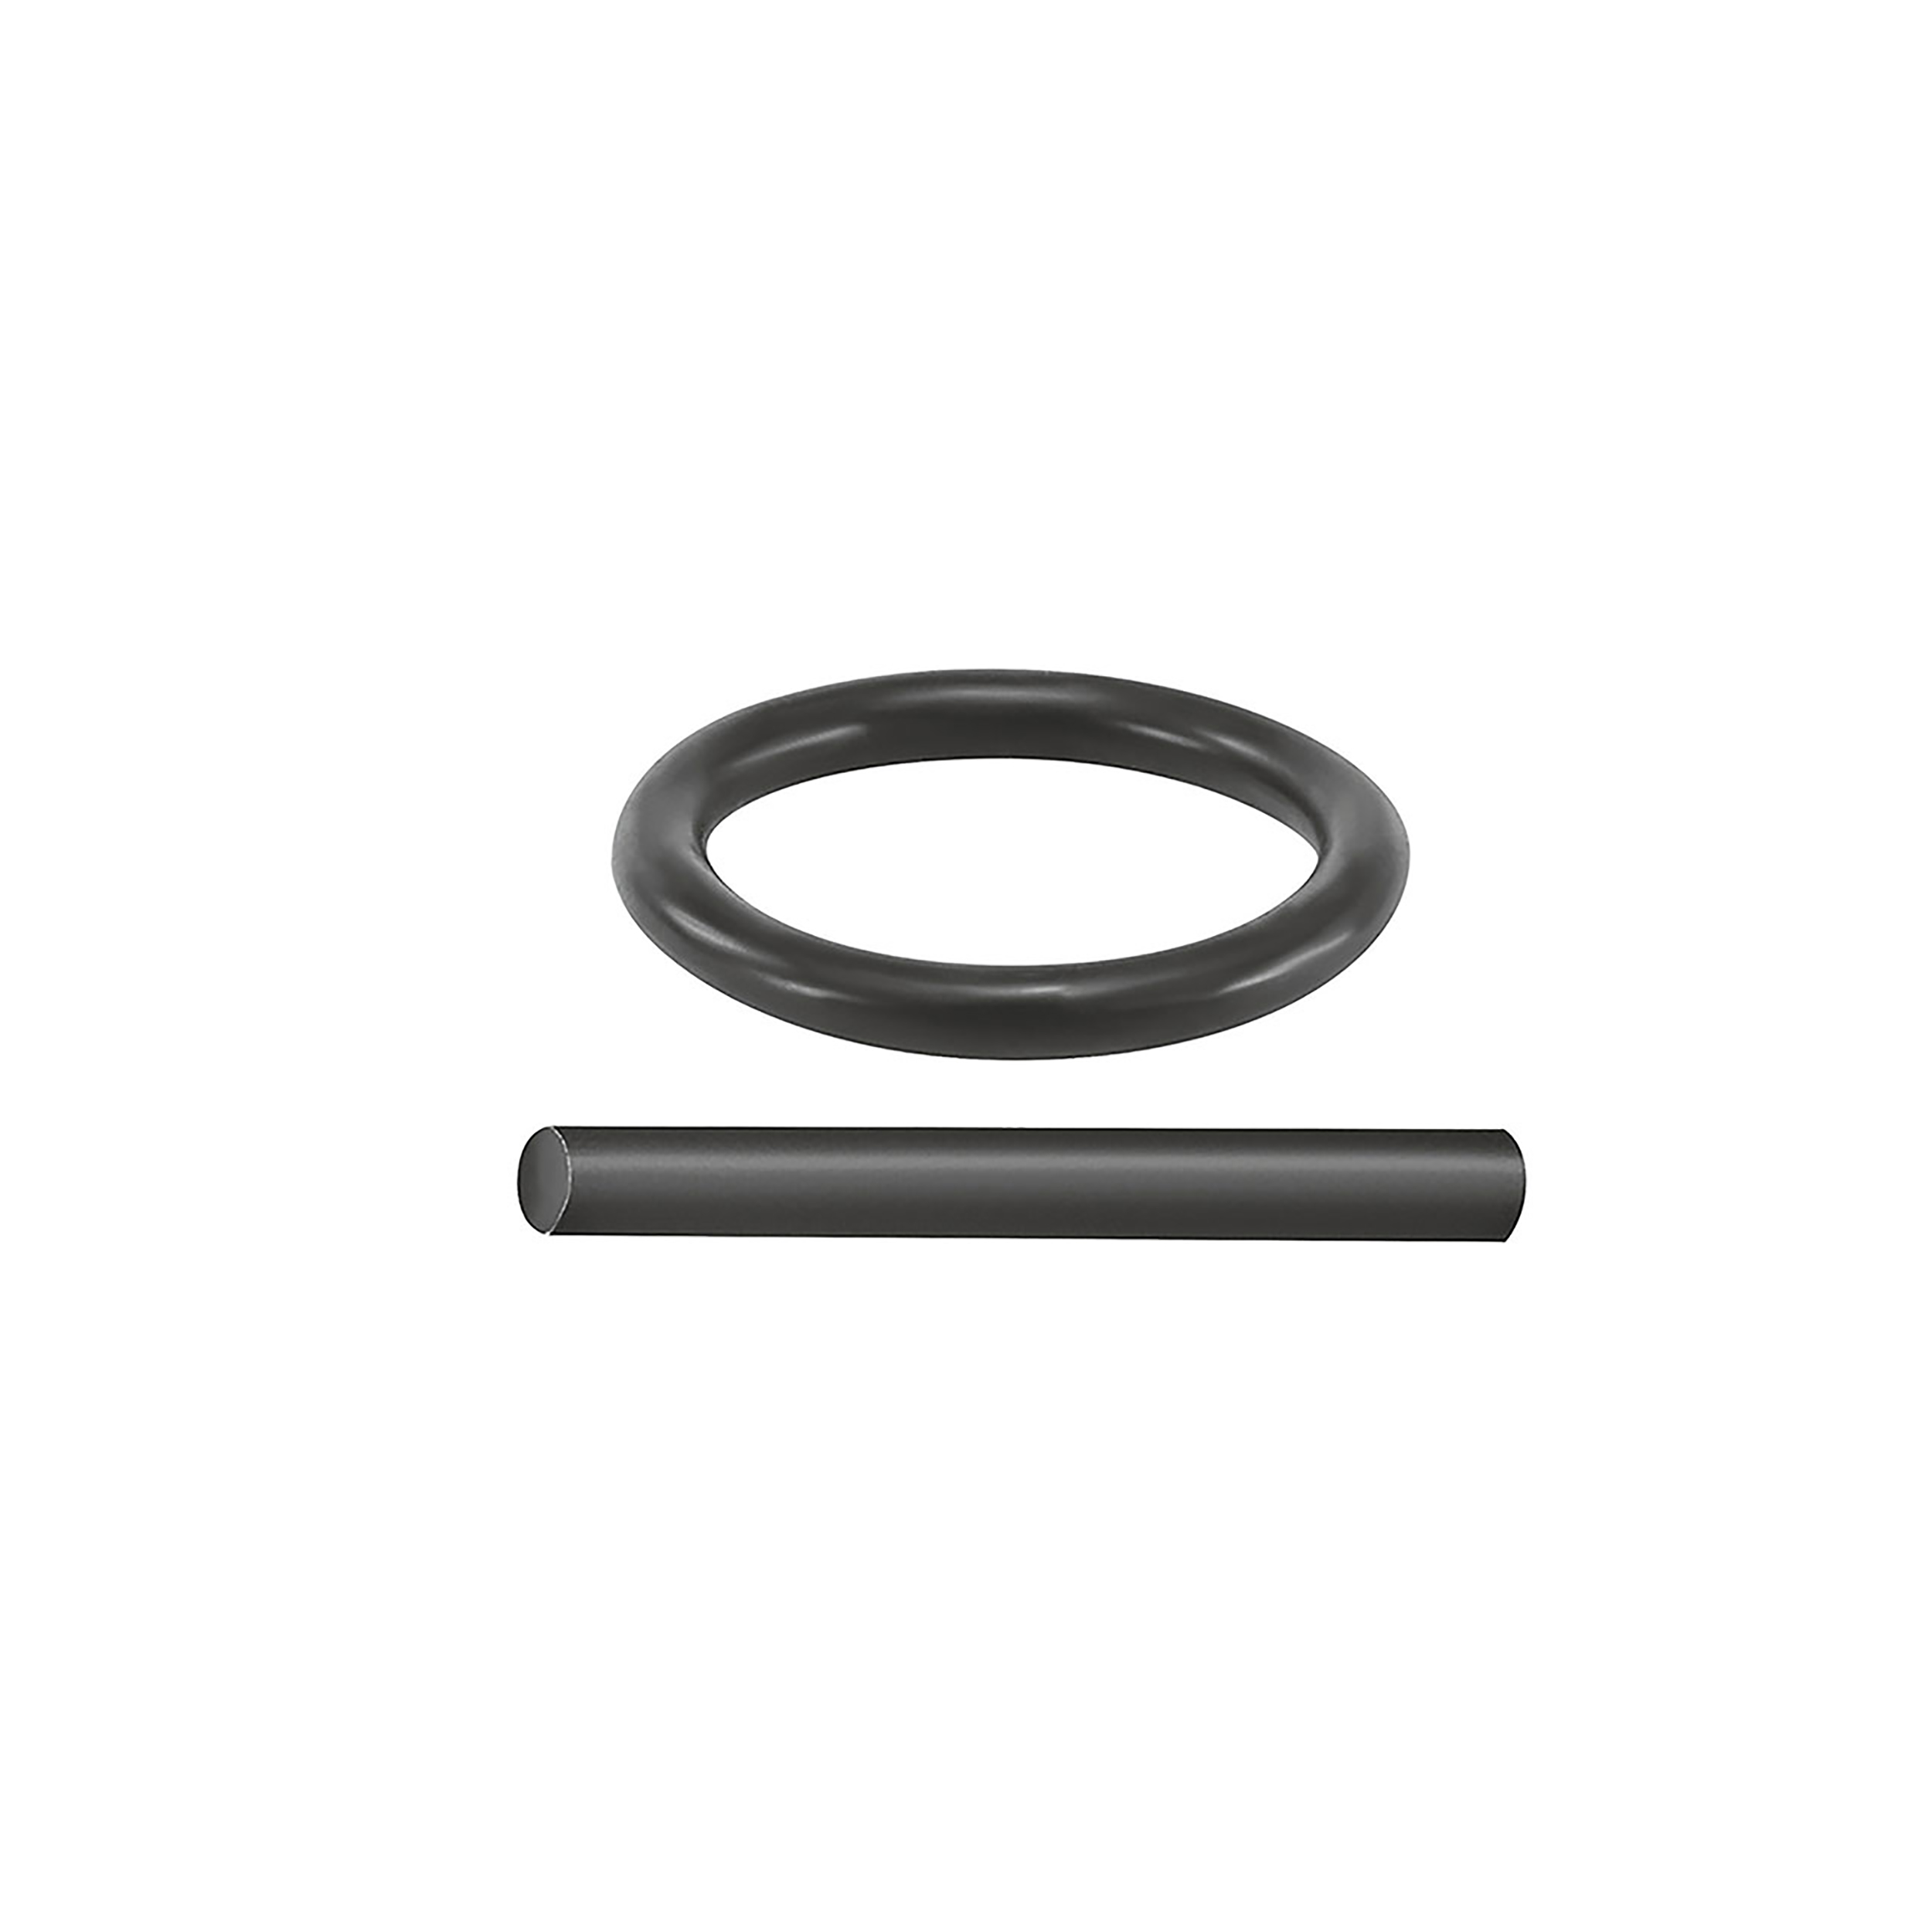 Locking ring, 36x5 mm, 17-46 mm, MATADOR item no.: 75990001